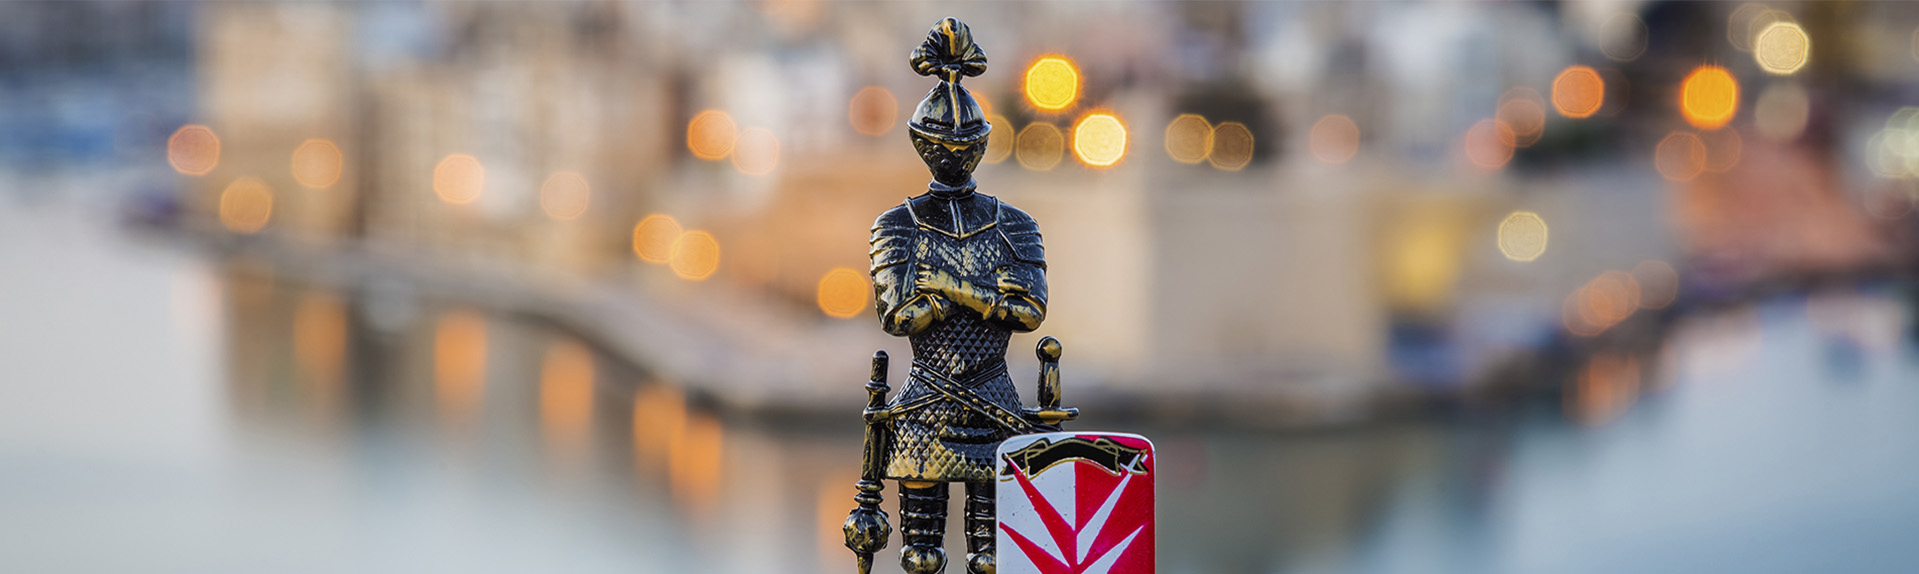 Due Diligence & Security - Malta Saint John's Cavalier